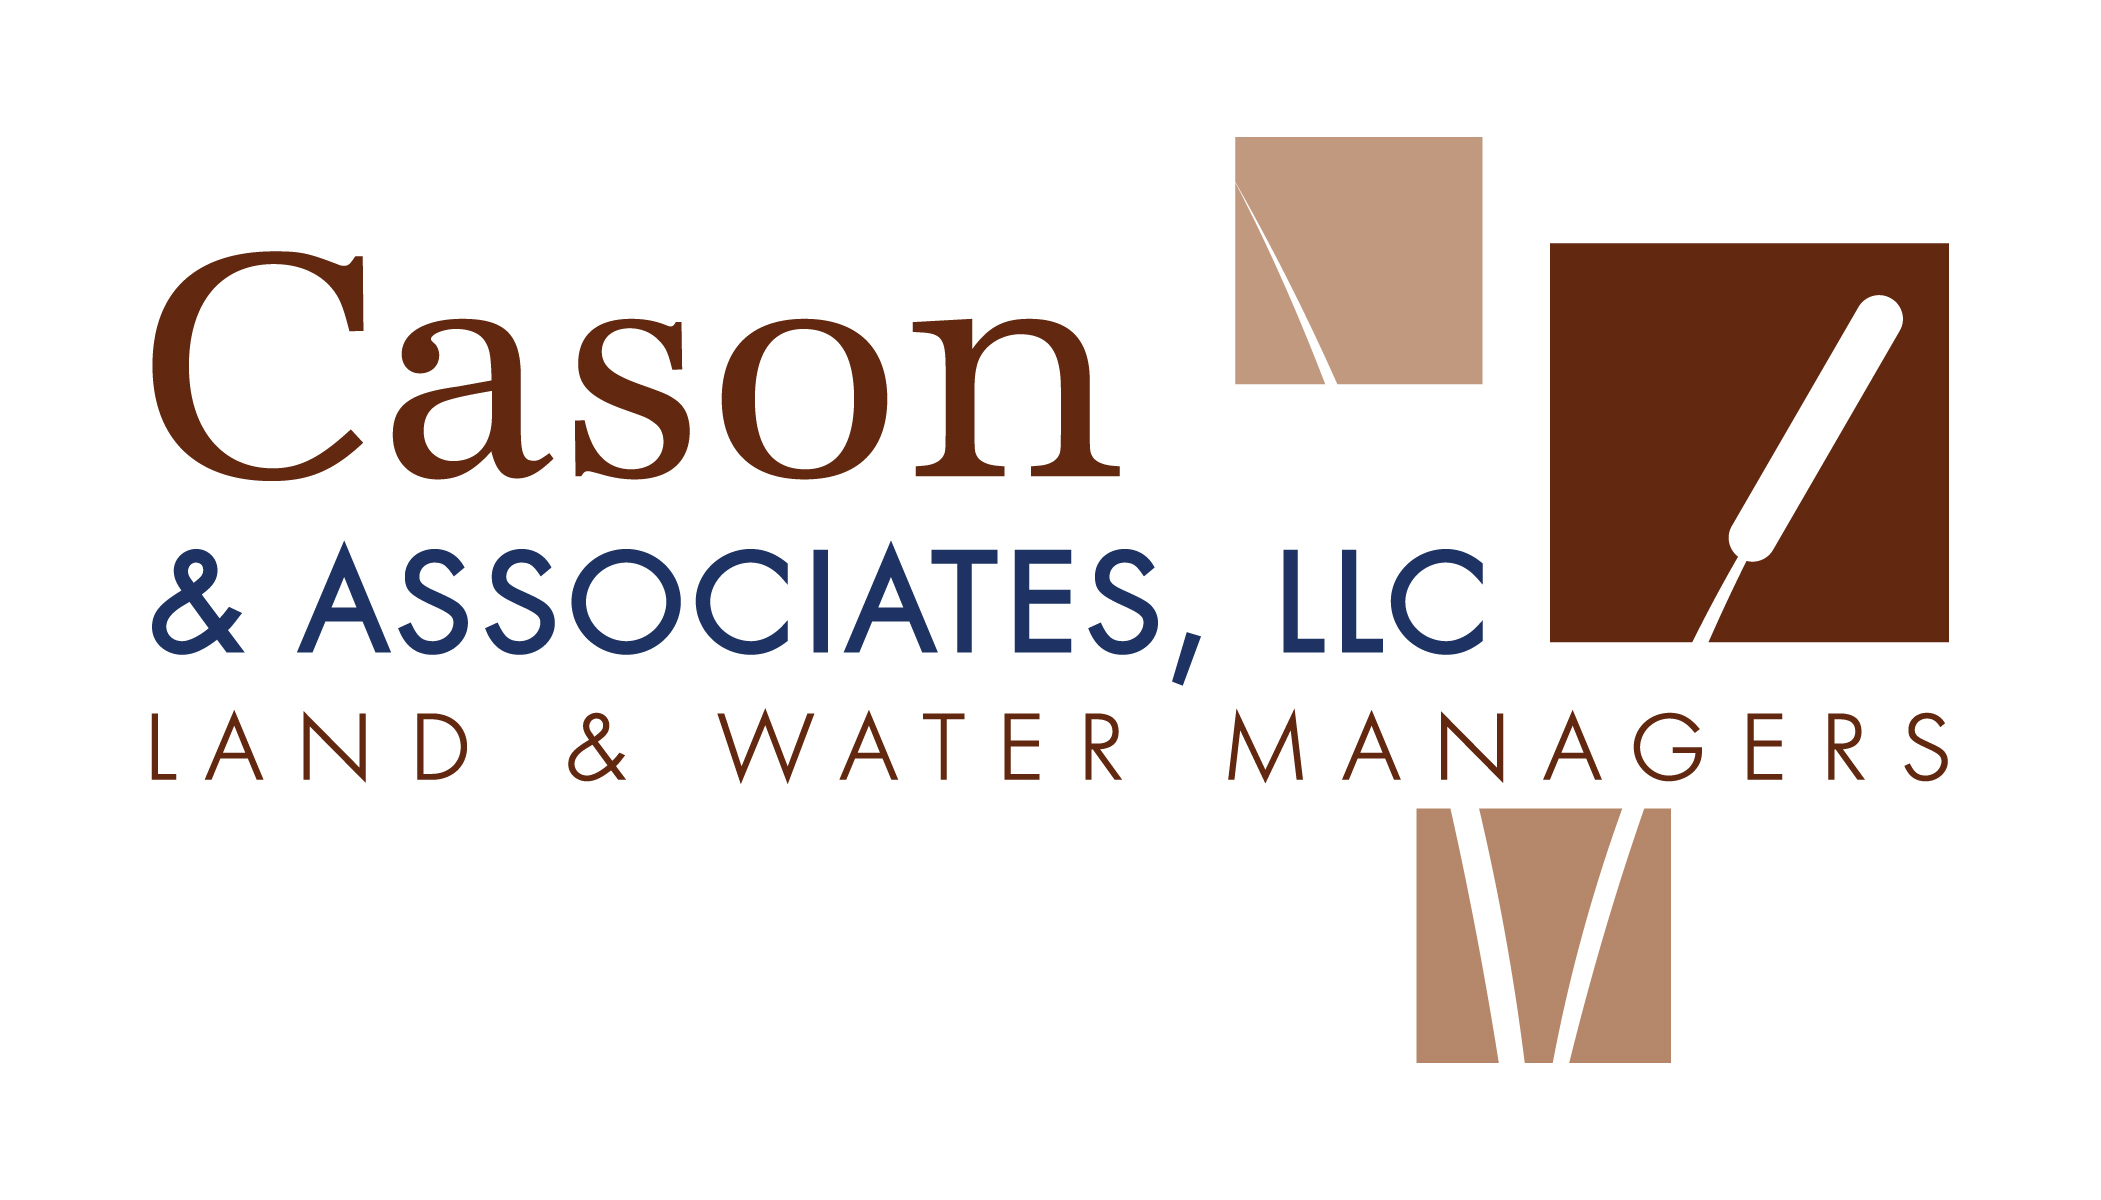 Cason & Associates, LLC